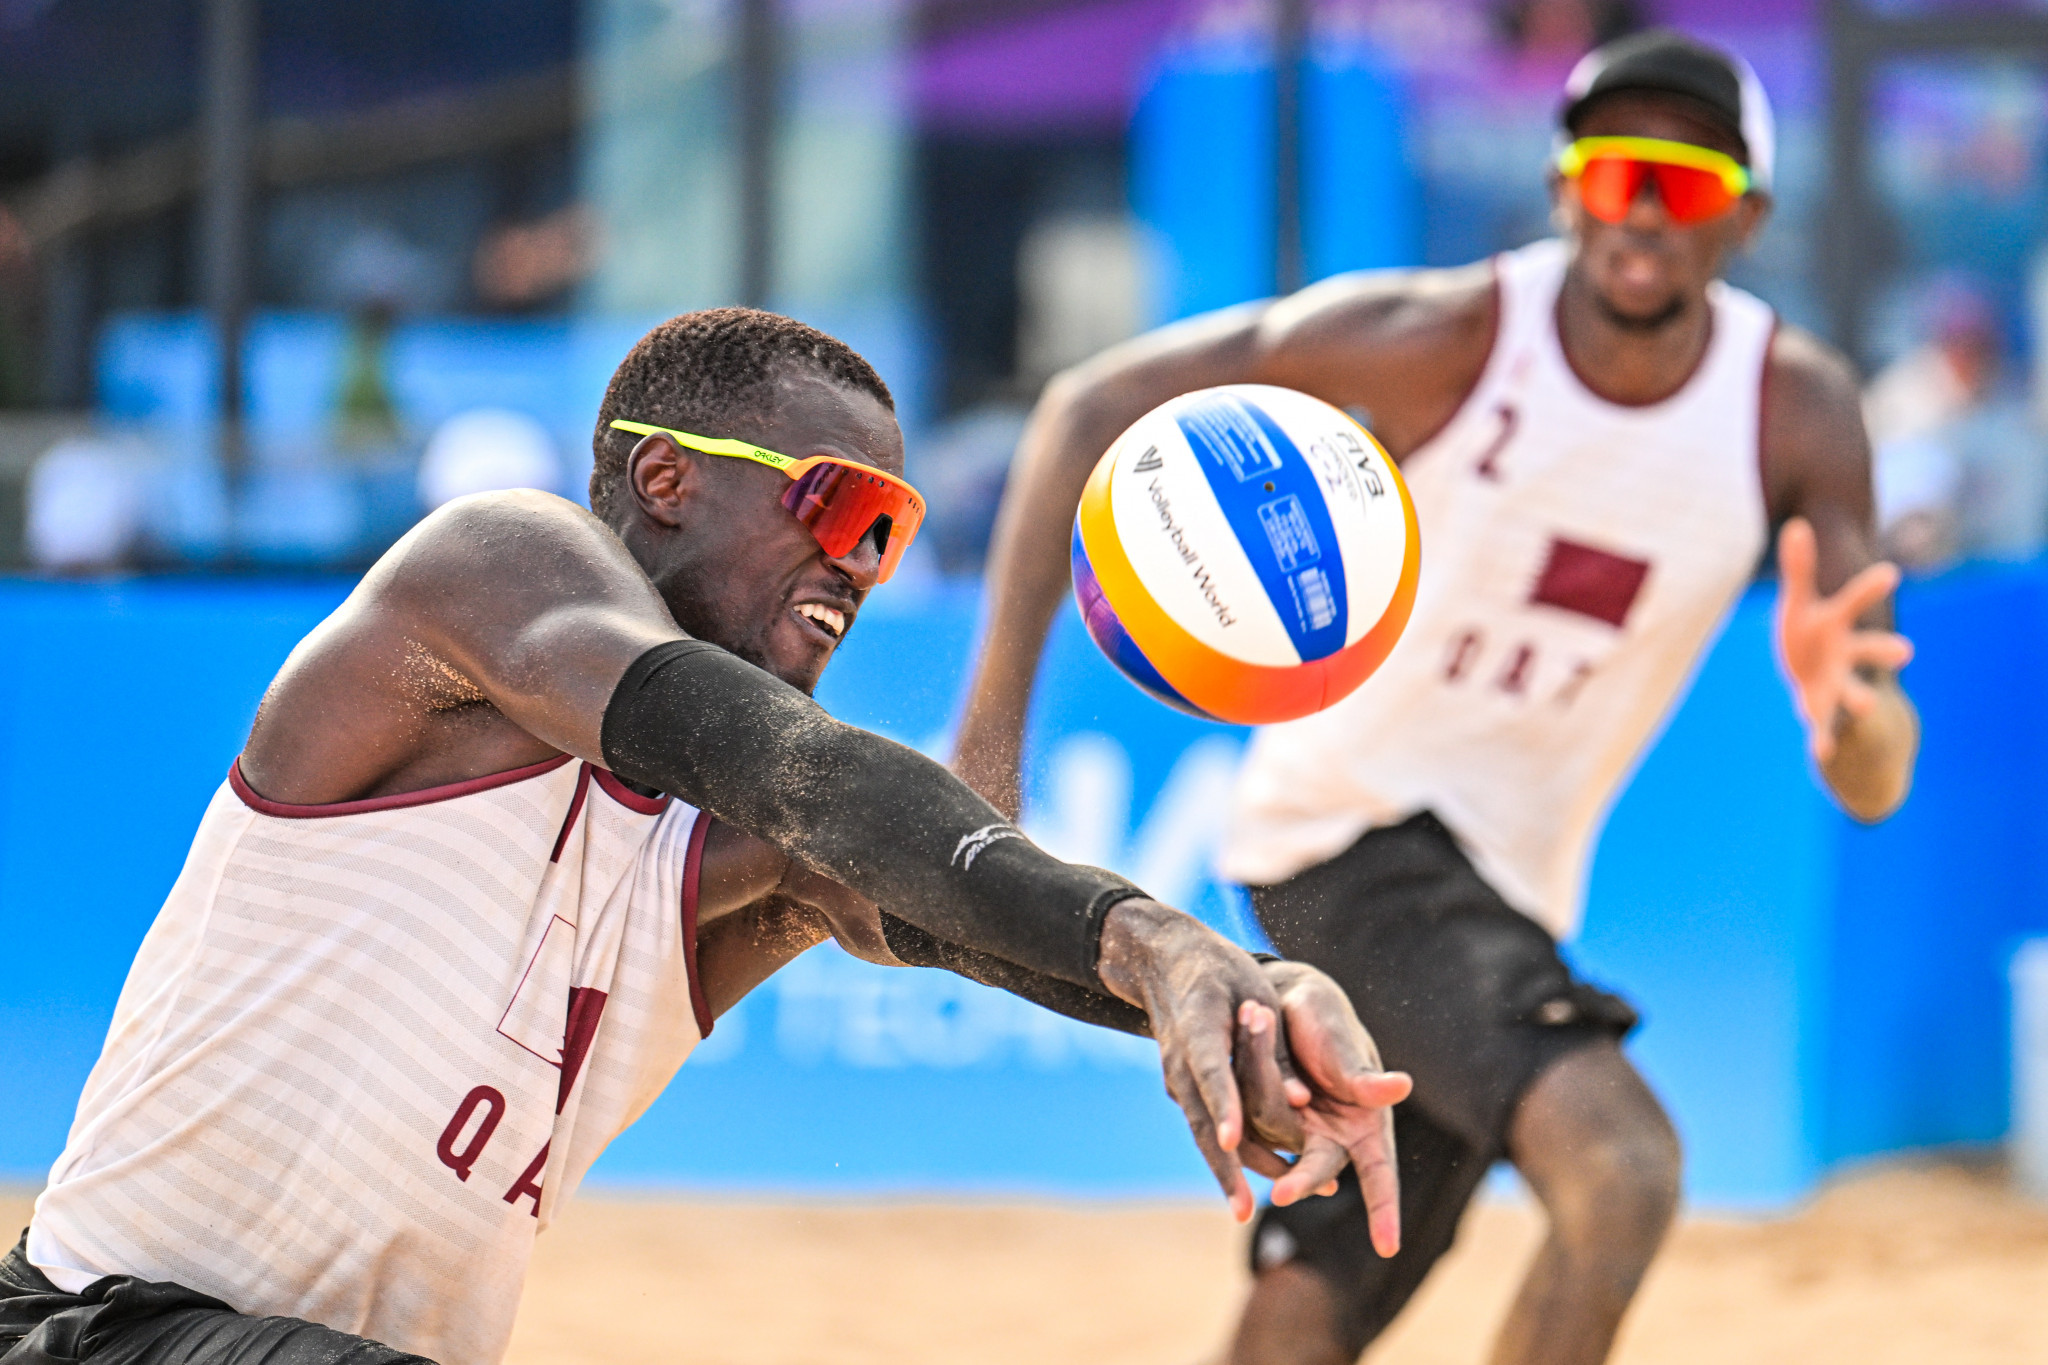 Cherif Samba, left, and Ahmed Janko of Qatar retained the men's beach volleyball title with victory over China's Mutailipu Abuduhalikejiang and Wu Jiaxin ©Hangzhou 2022